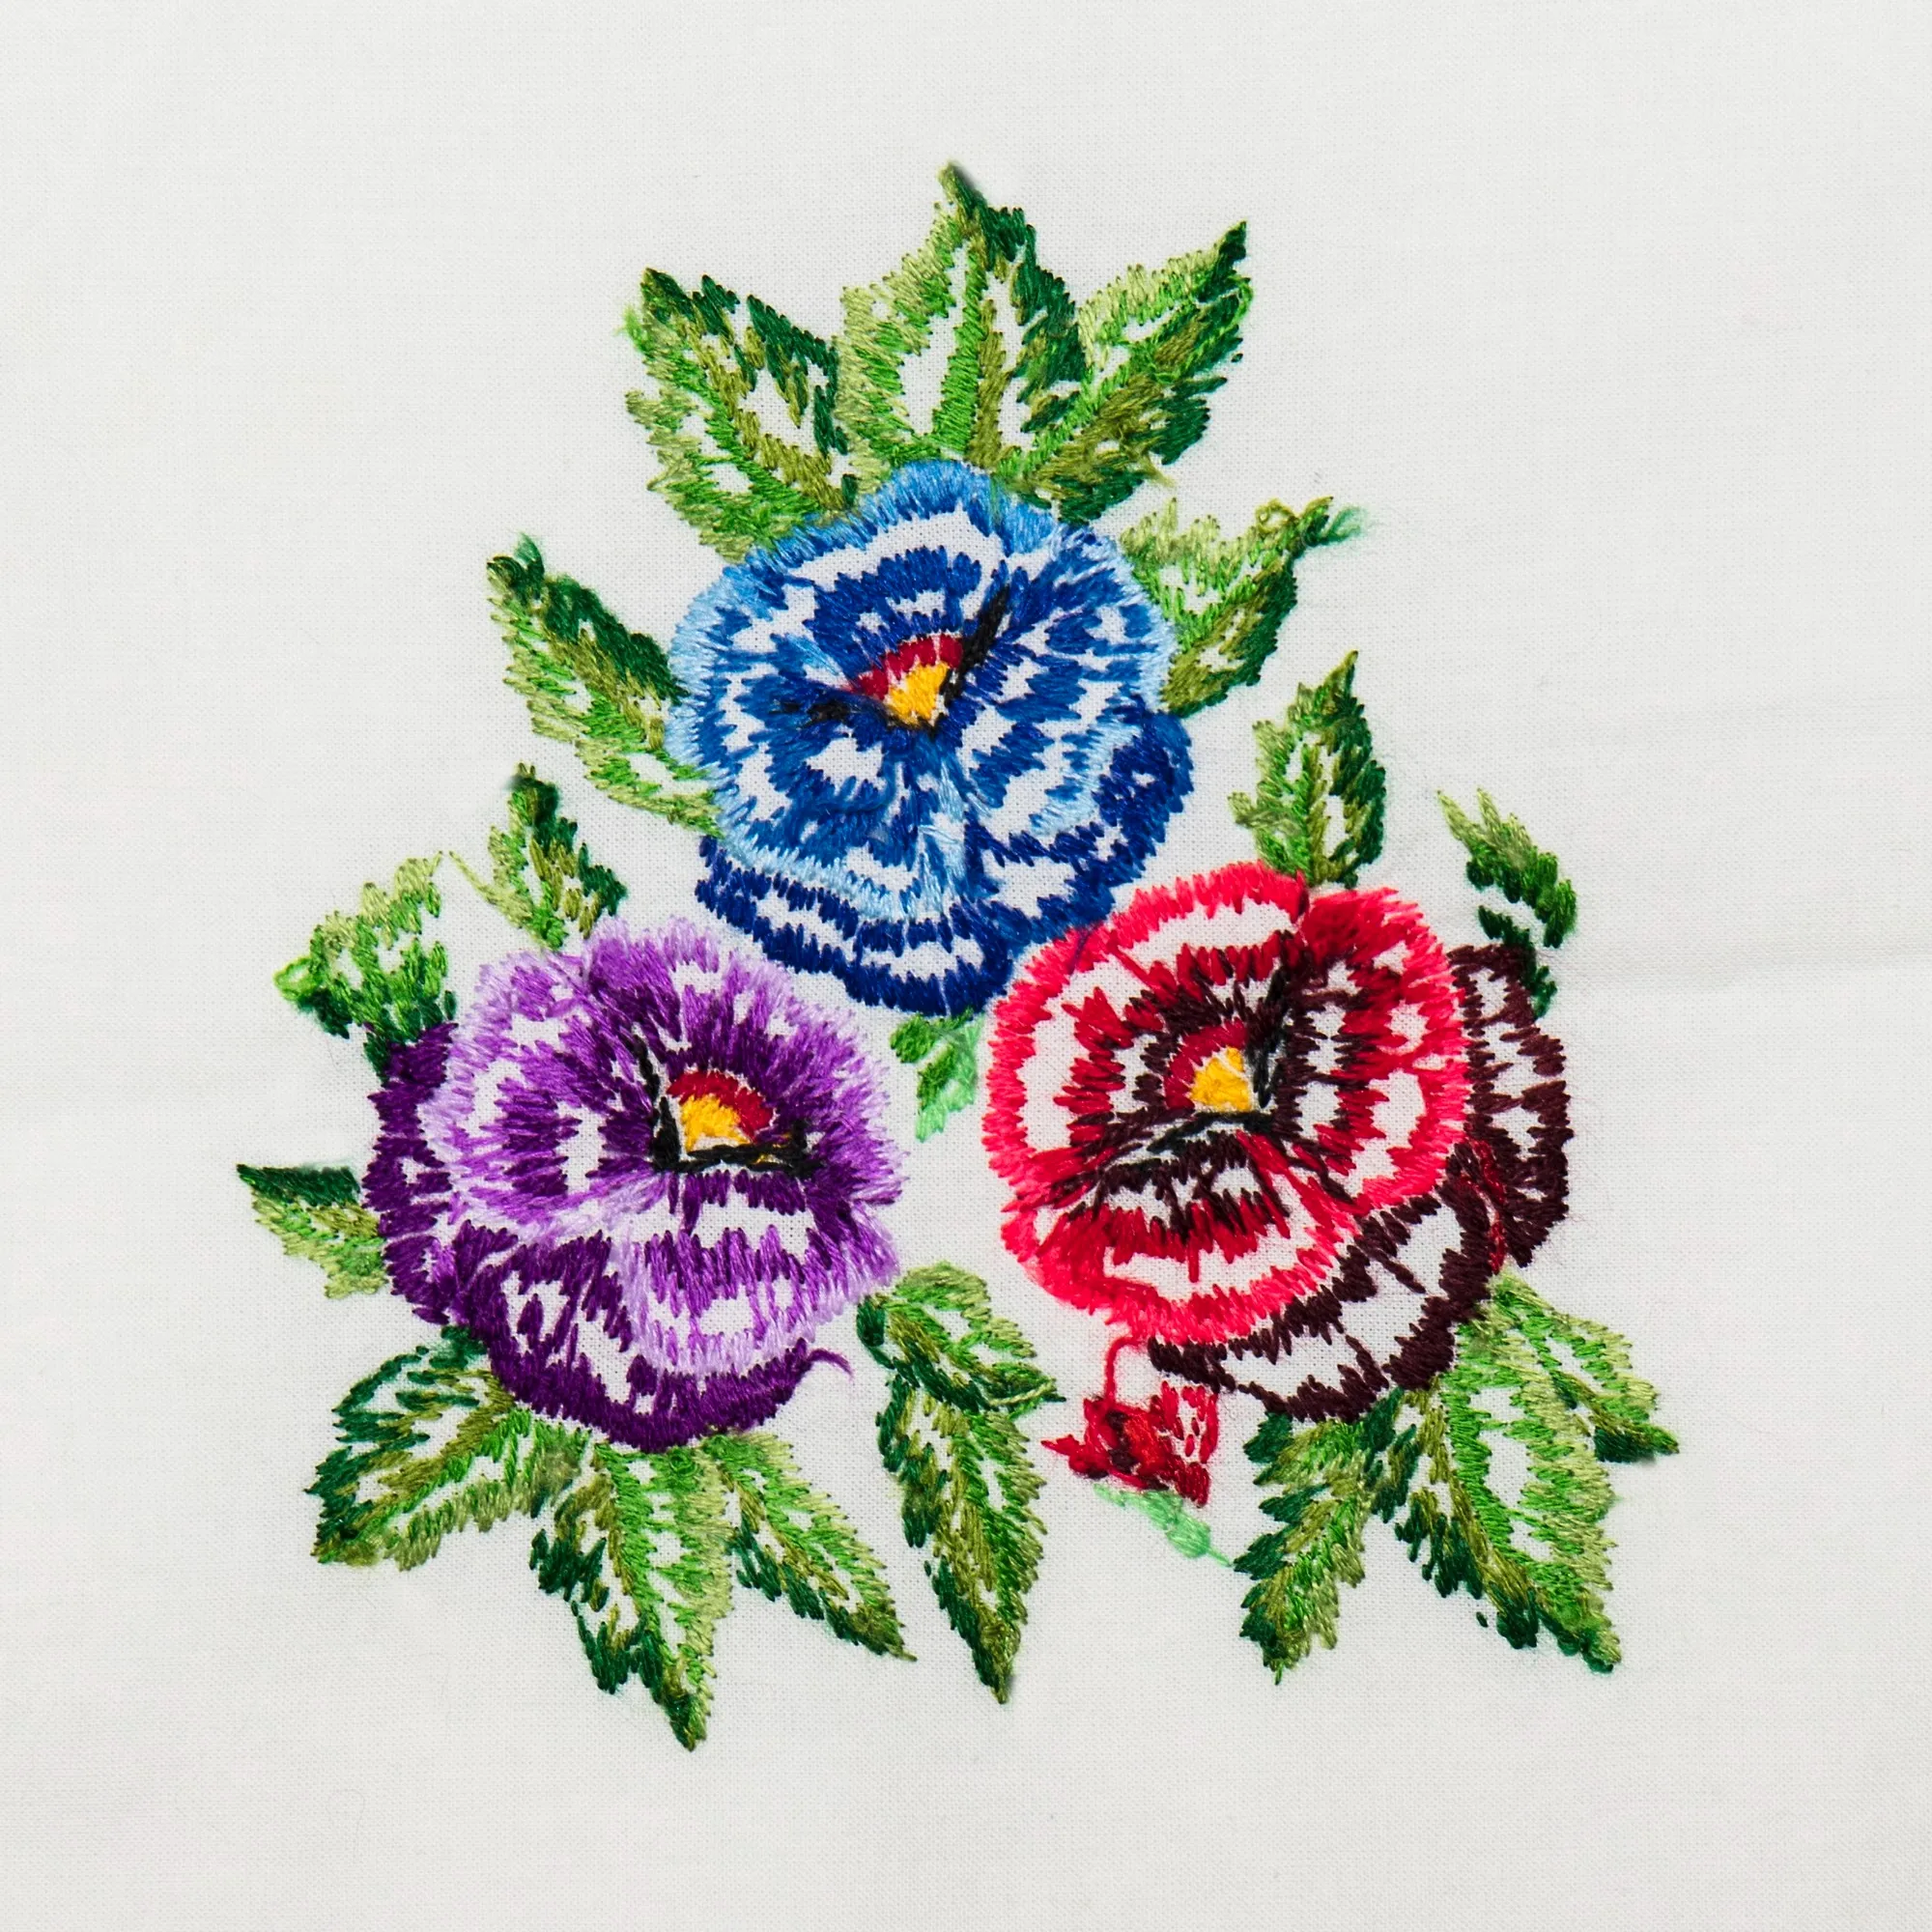 Personalized Embroidery Wedding Napkin Design